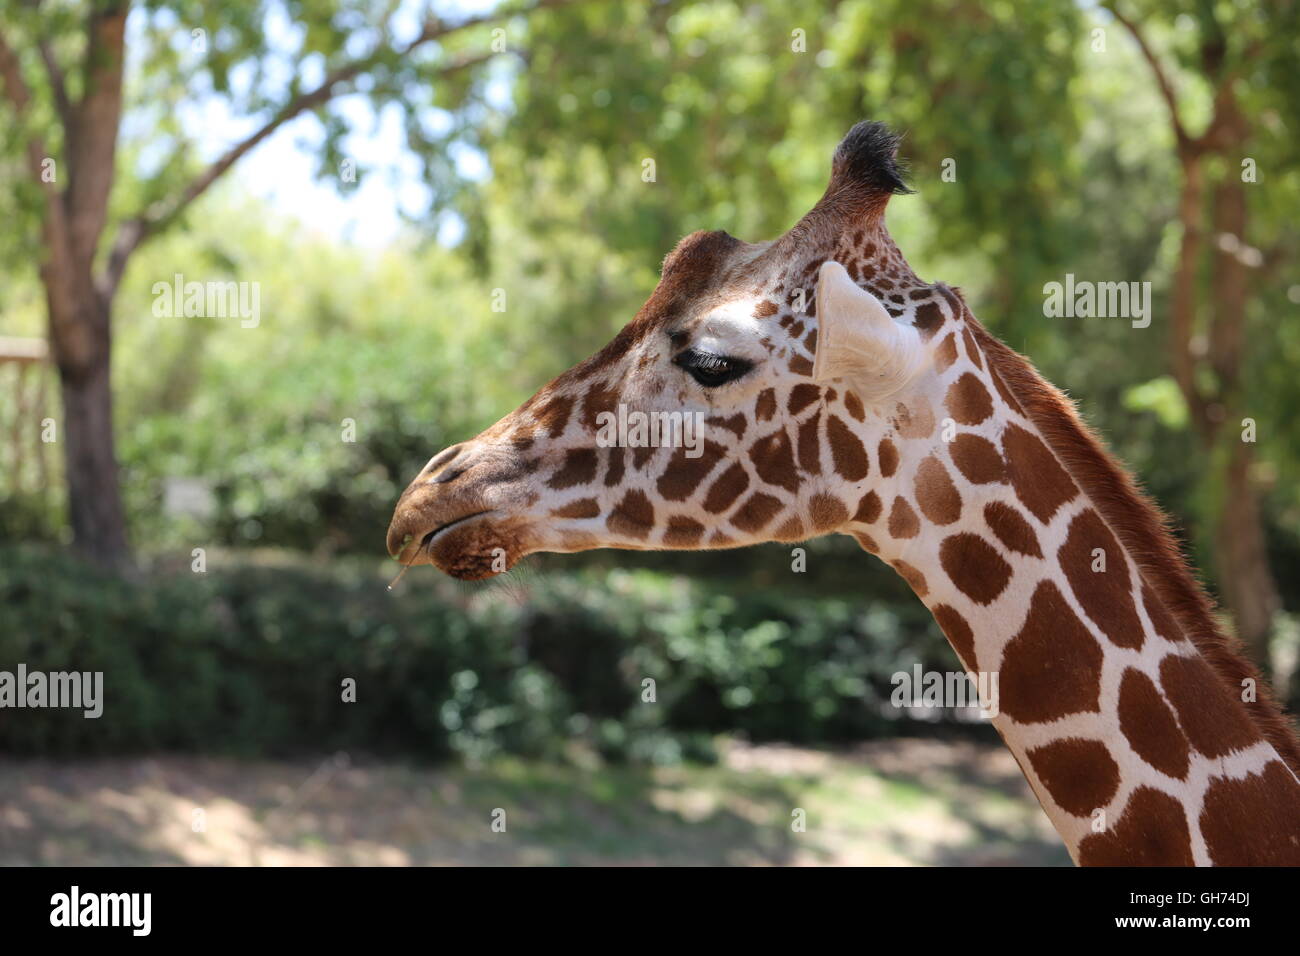 Giraffe Portrait, Close Up.Giraffe in the Zoo. Stock Photo